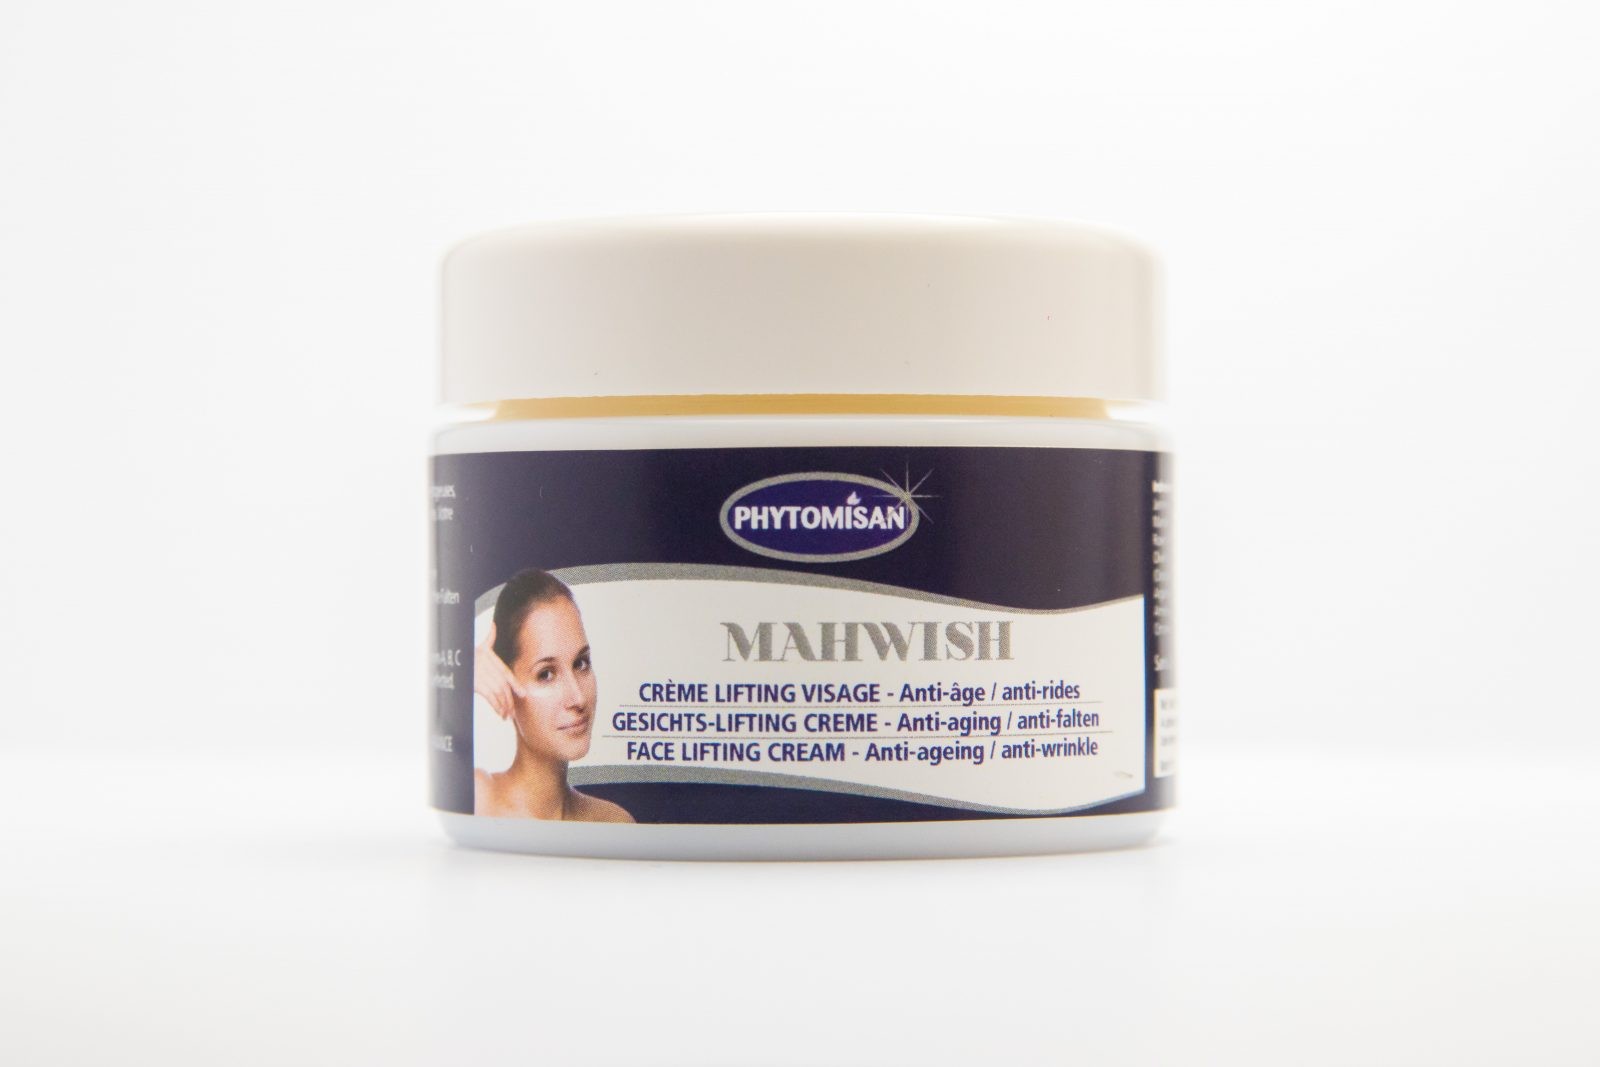 Mahwish face lifting cream